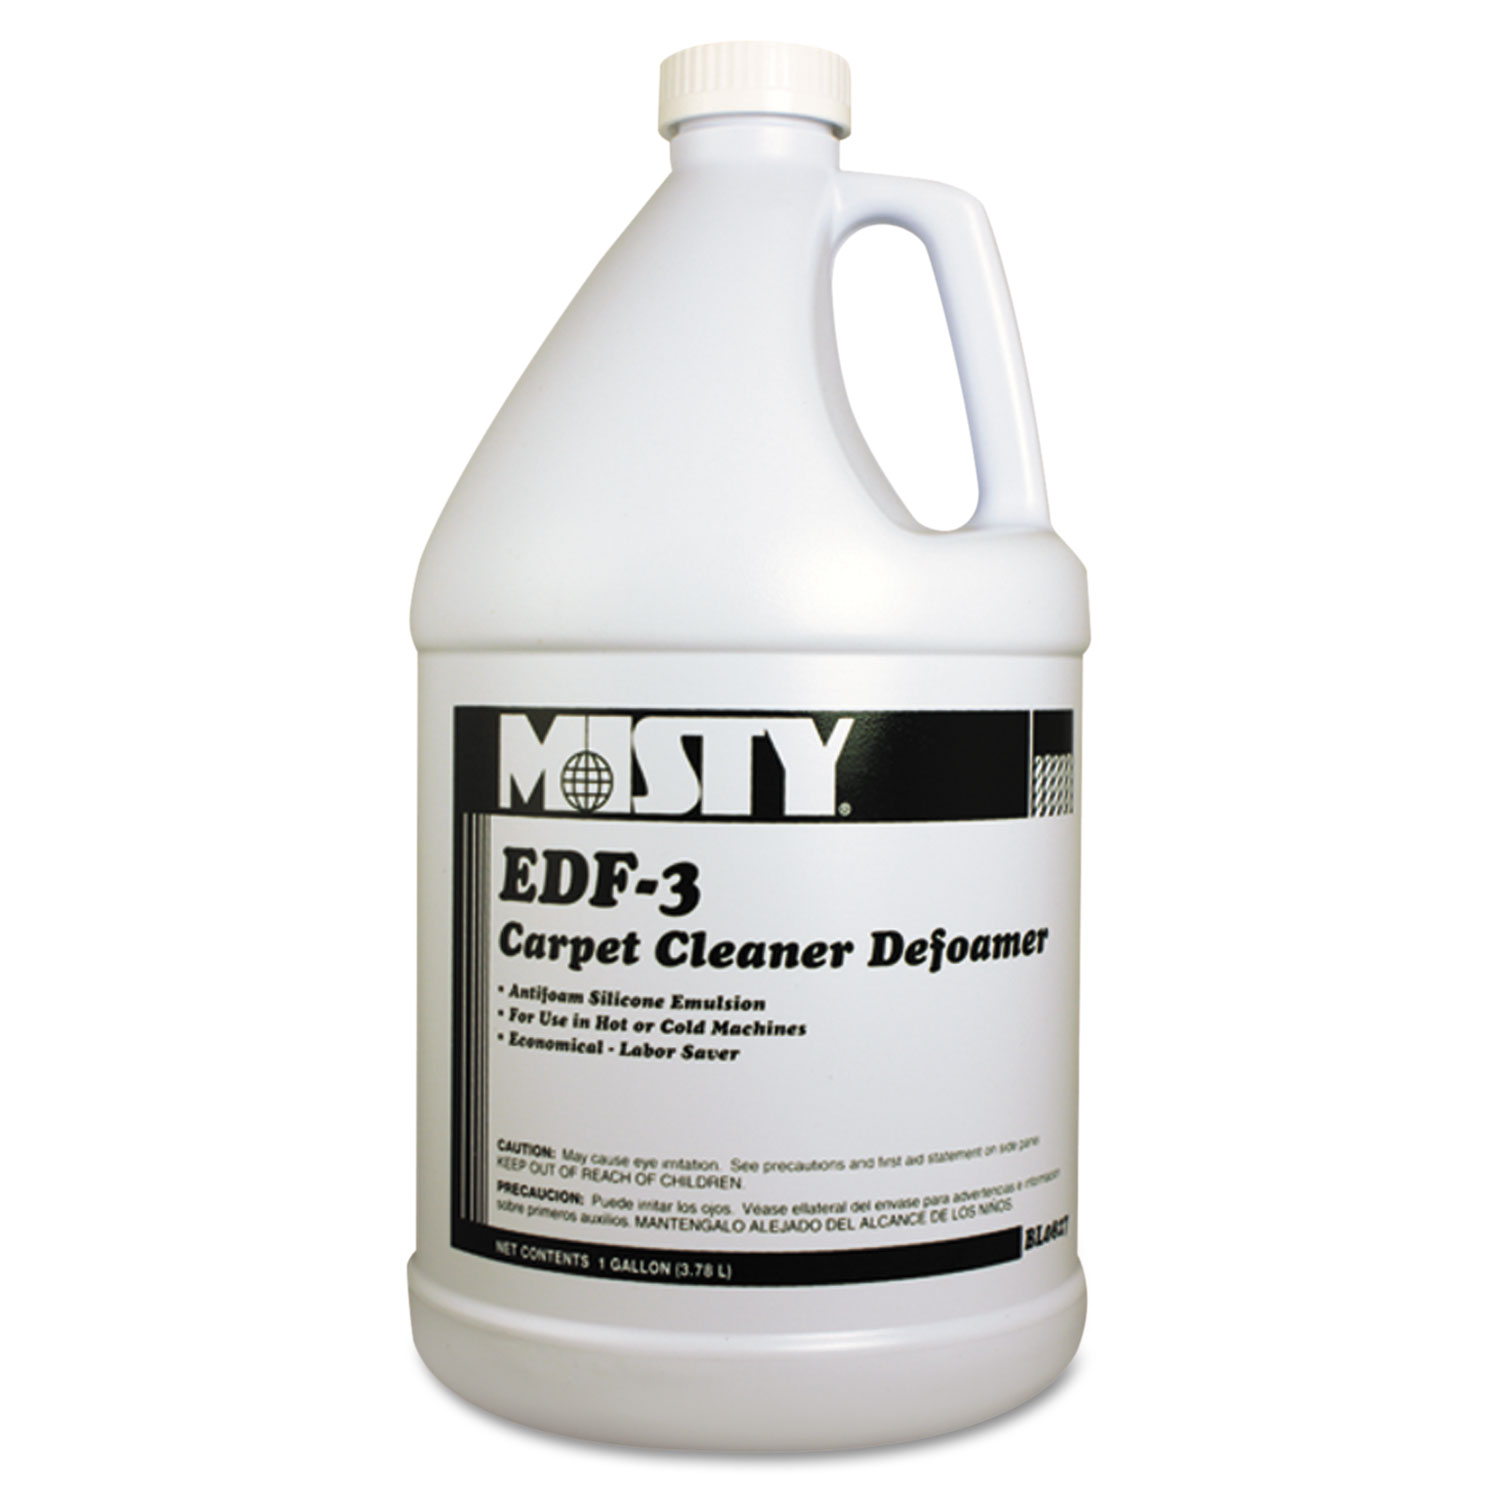  Misty 1038773 EDF-3 Carpet Cleaner Defoamer, 1 gal. Bottle, 4/Carton (AMR1038773) 